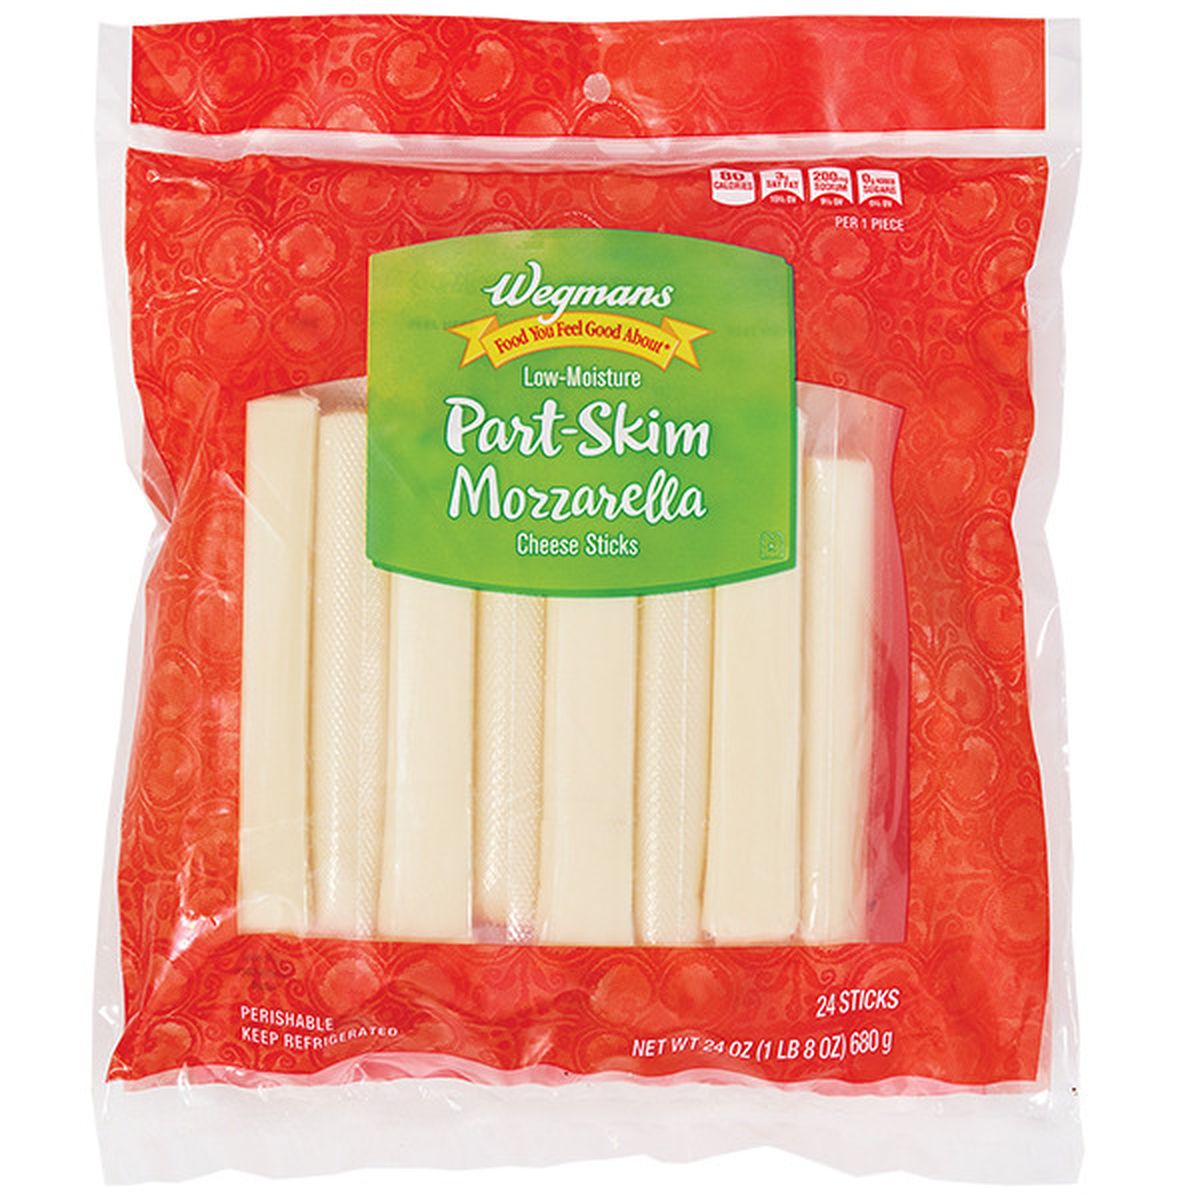 Calories in Wegmans Part-Skim Mozzarella Cheese Sticks, 24 Count